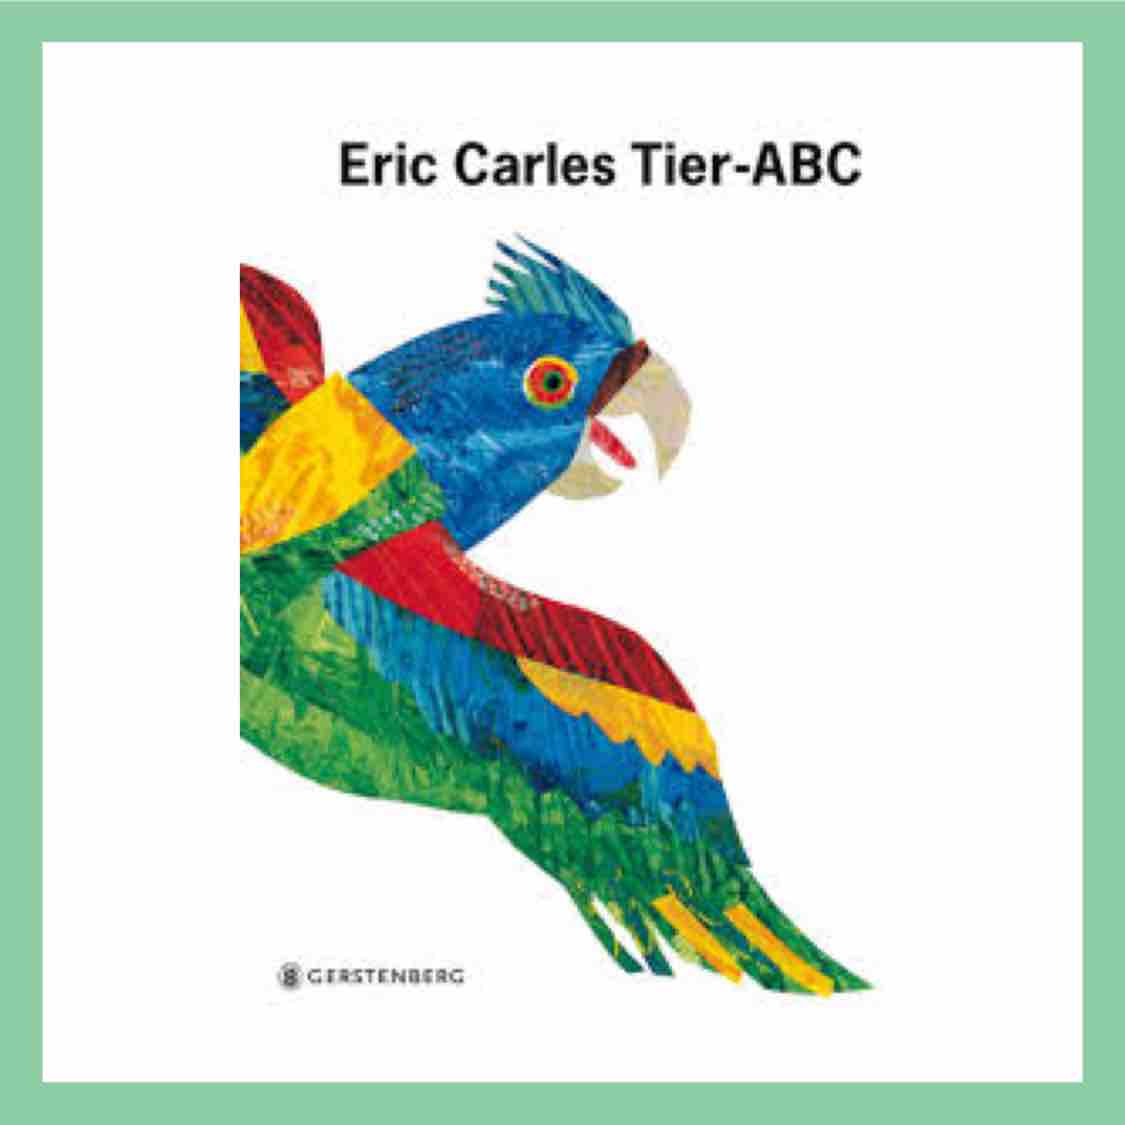 Eric Carles Tier ABC